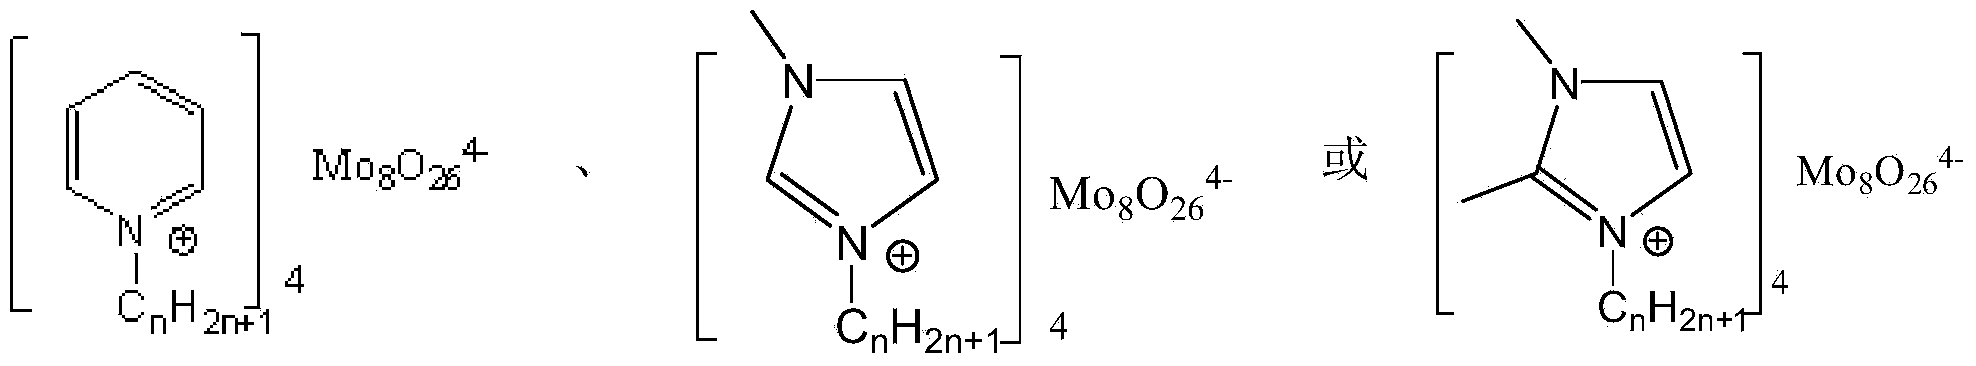 FCC (Fluid Catalytic Cracking) gasoline oxidation desulphurization method based on molybdenum polyoxometallate